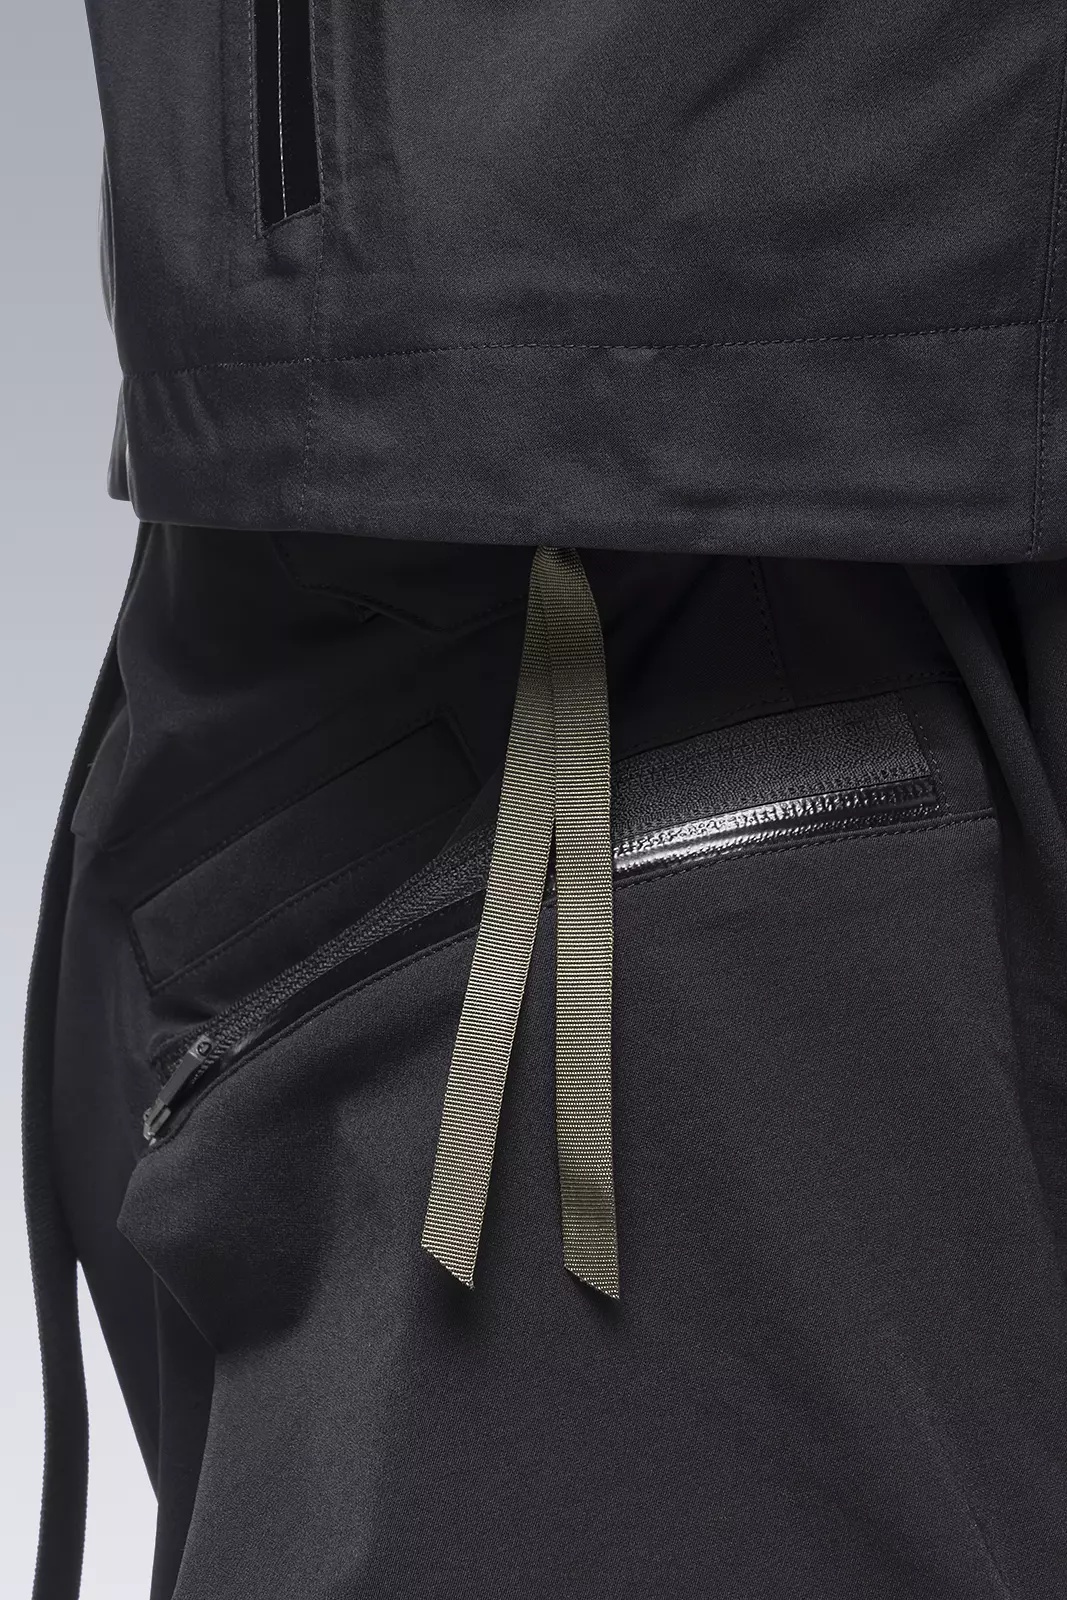 J1A-GTKR-BKS KR EX 3L Gore-Tex® Pro Interops Jacket Black with size 5 WR zippers in gloss black - 32